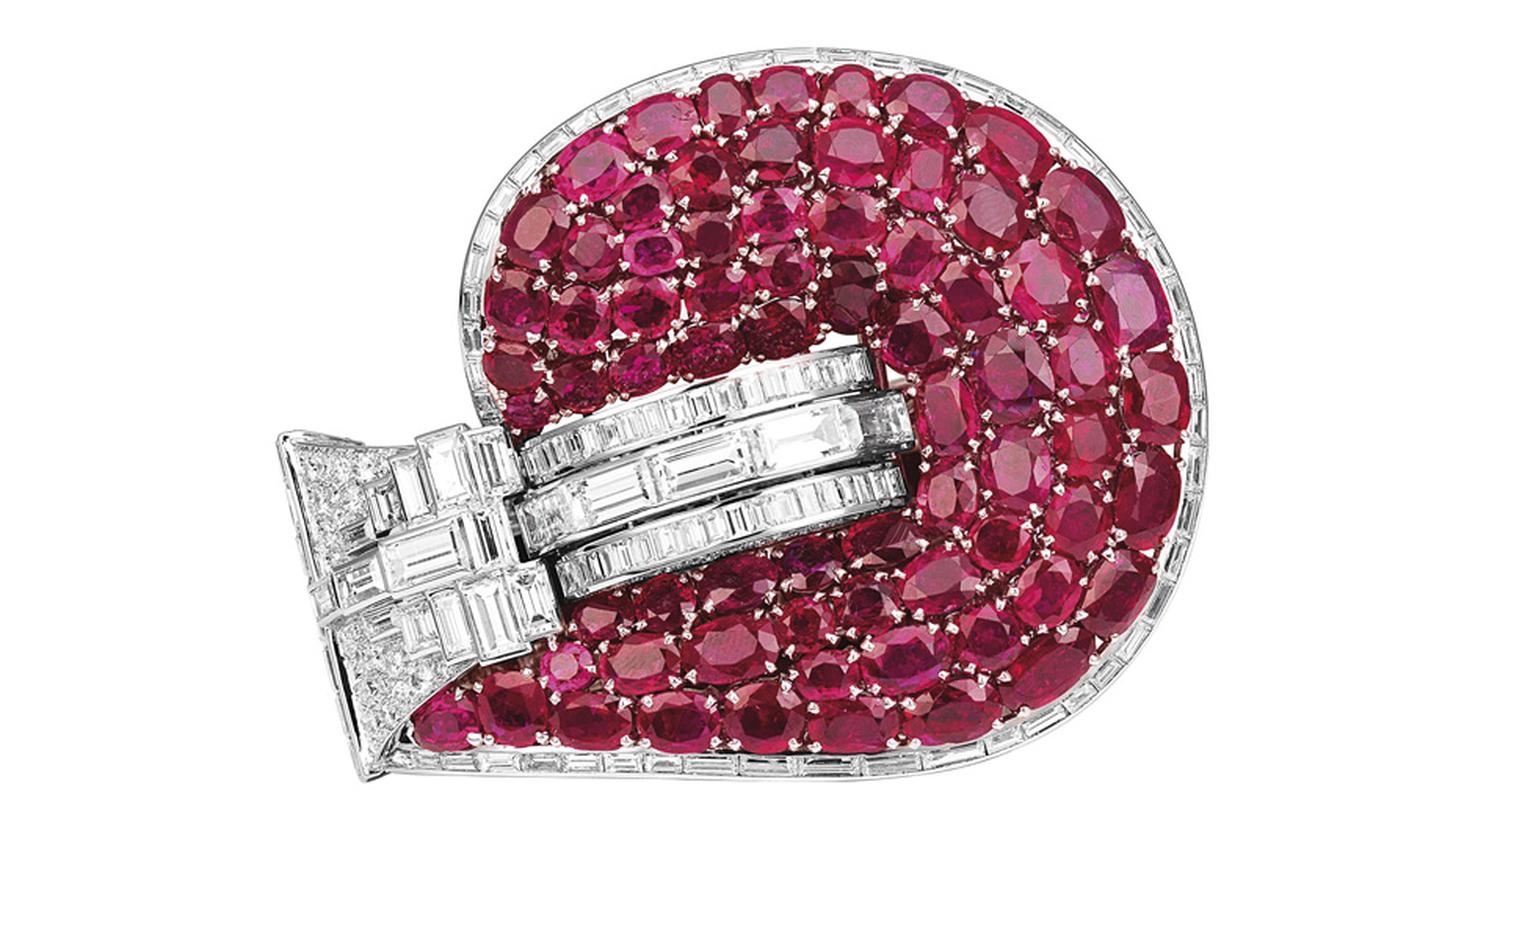 Van Cleef & Arpels Jarretiere bracelet. Platinum, rubies & diamonds. Marlene Dietrich’s special order, circa 1937.